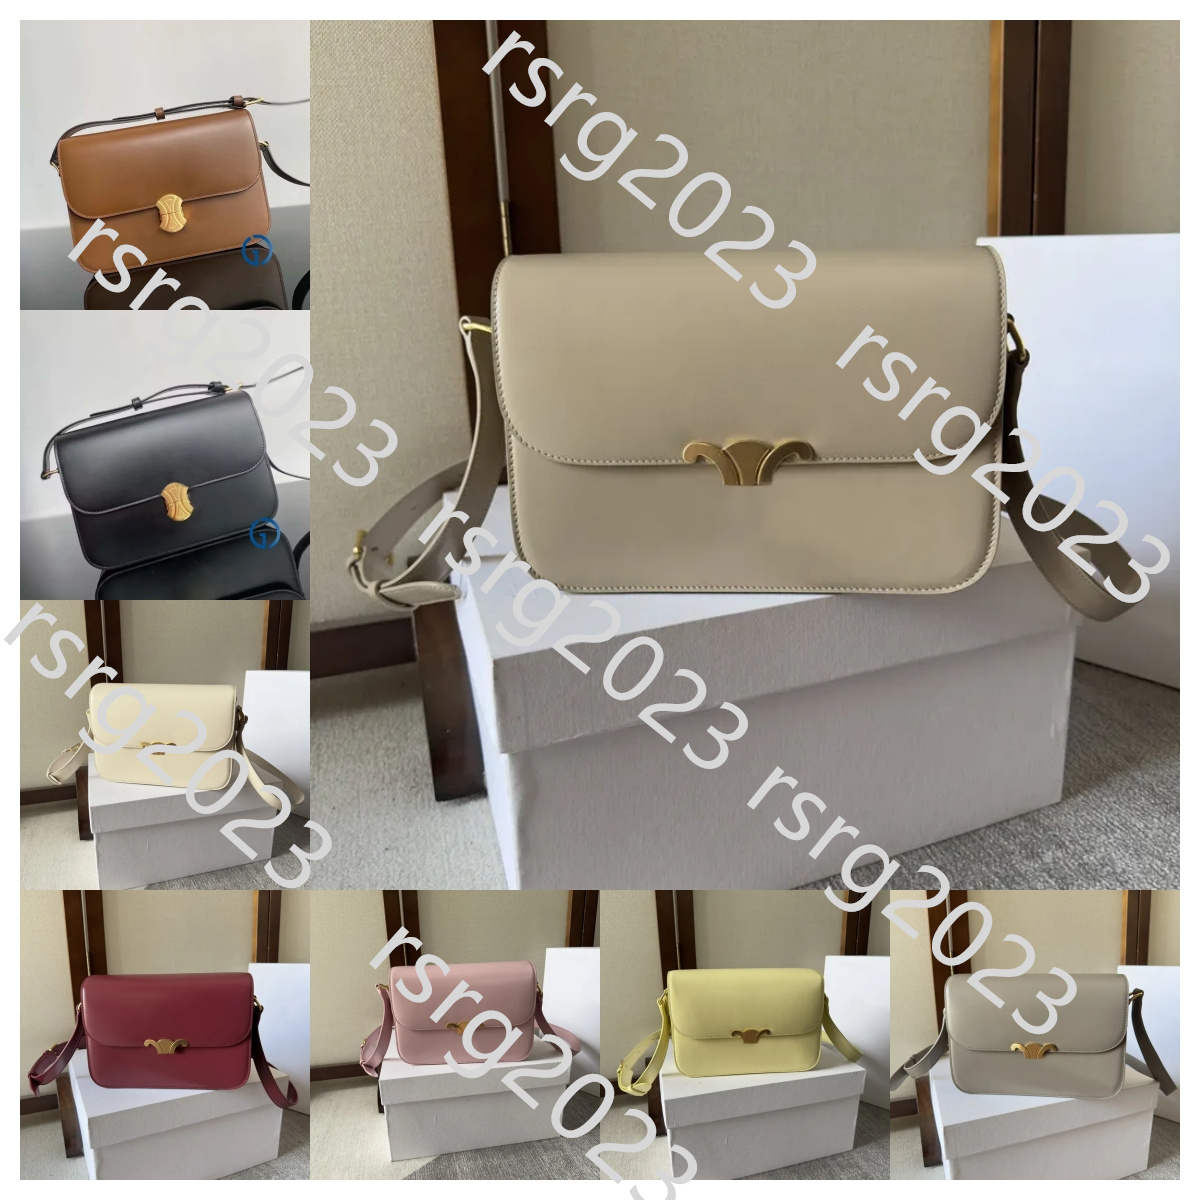 10A 22K Triomphes Bag Diseñador de hombro Mini bolsos Classic Sobre Hobo Messenger Bolsos de cuero genuino de alta calidad